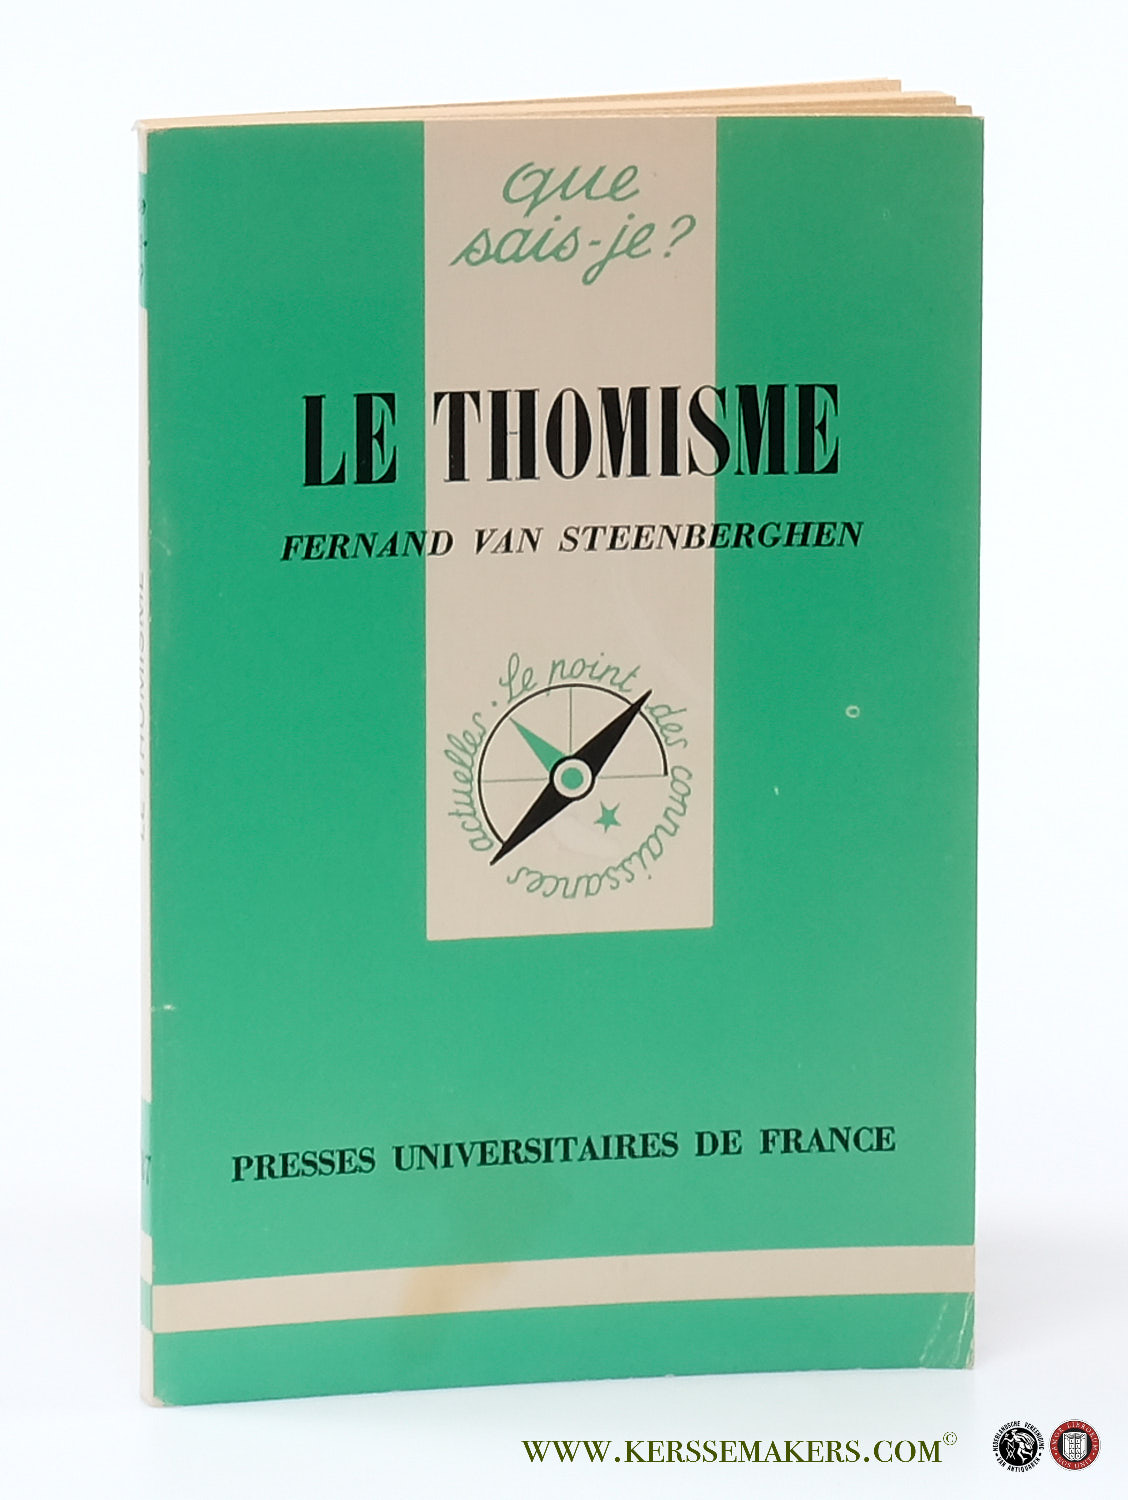 Le Thomisme. - Steenberghen, Fernand van.